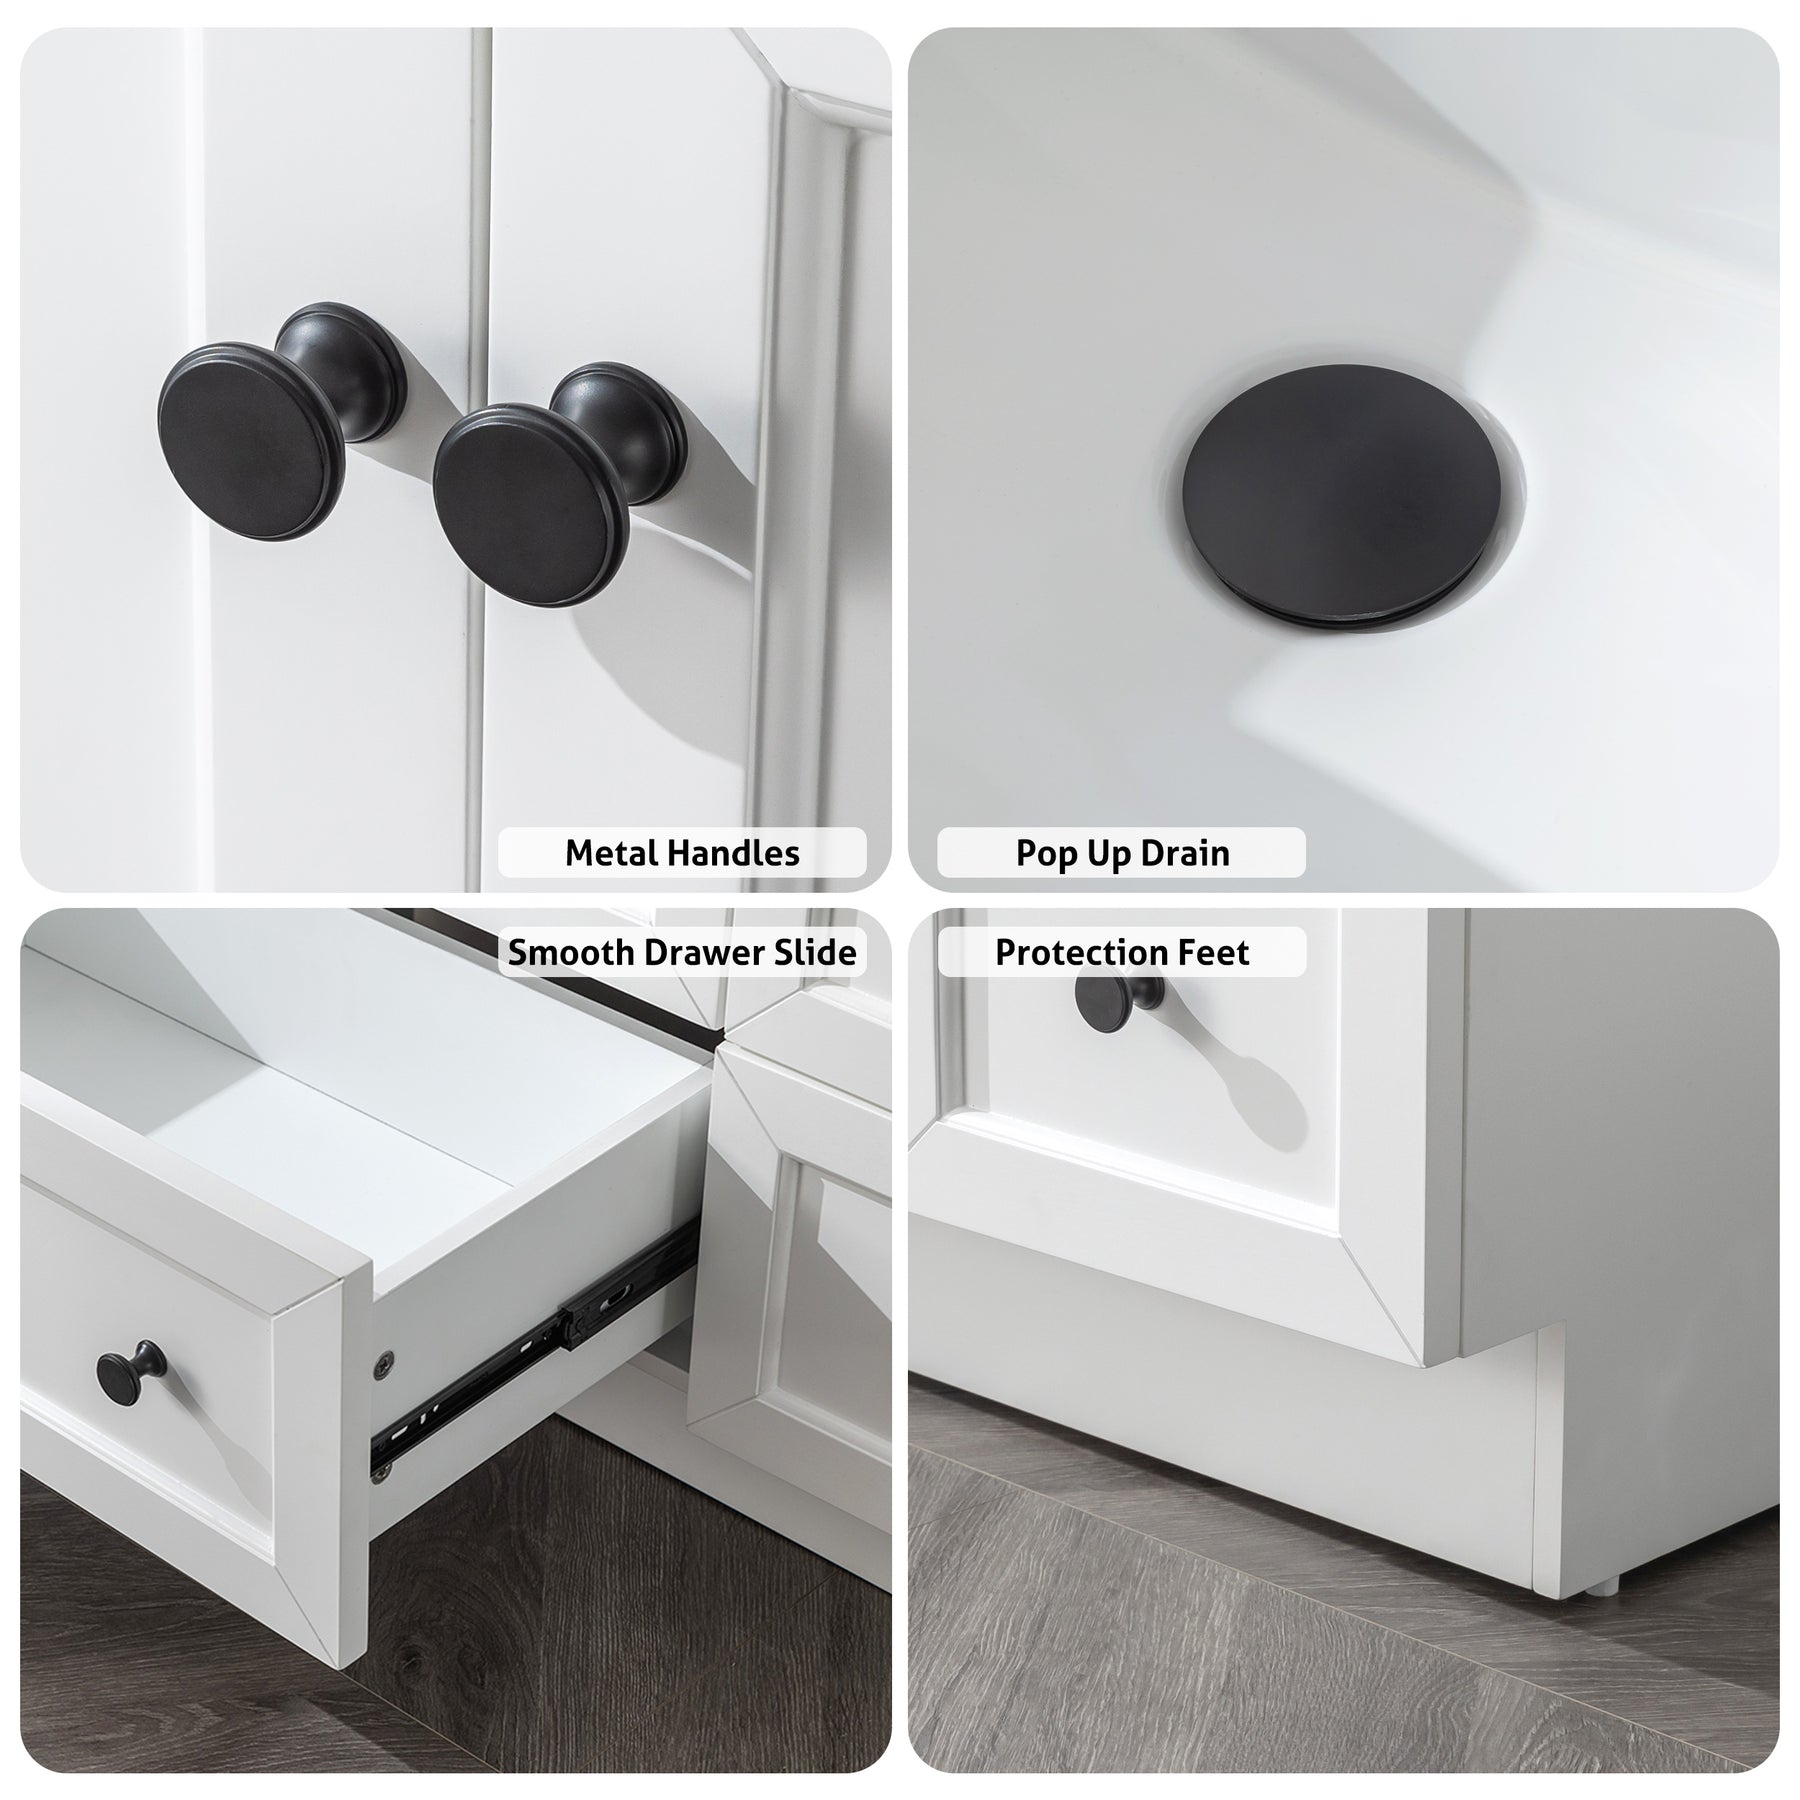 Kitchen Base 36" Freestanding Bathroom Vanity Combo with Single Undermount Sink